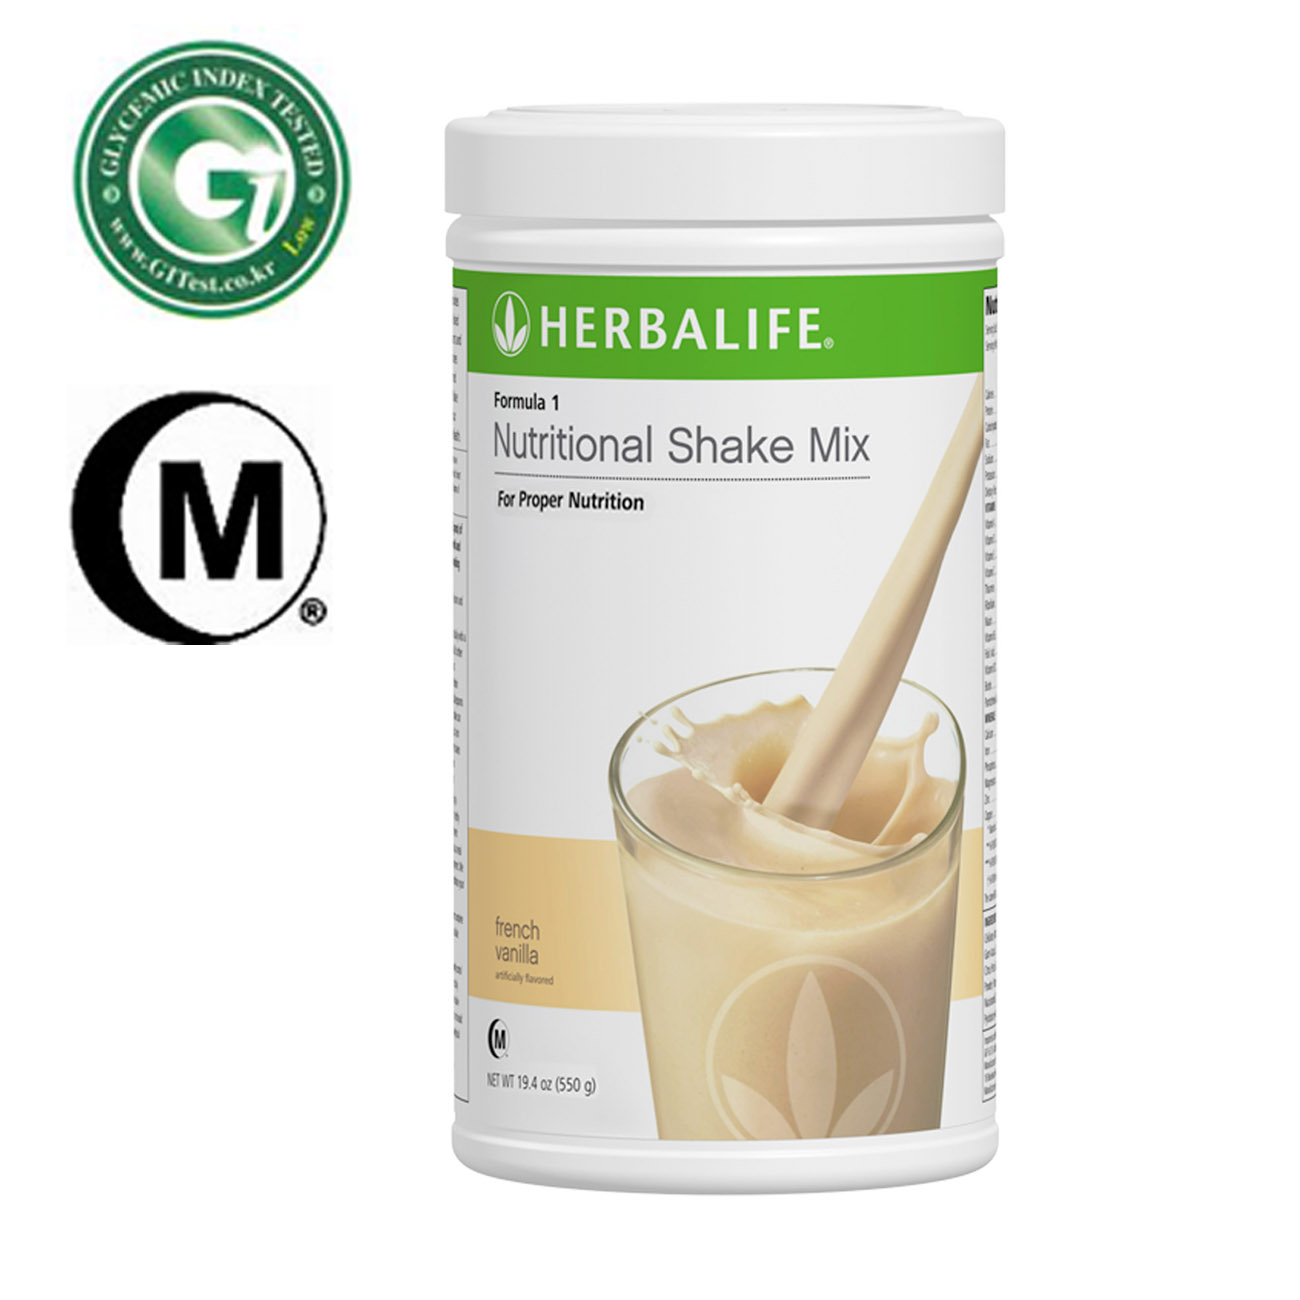 0127 Protein Shake Formula 1 Nutritional Shake Mix Canister French Vanilla